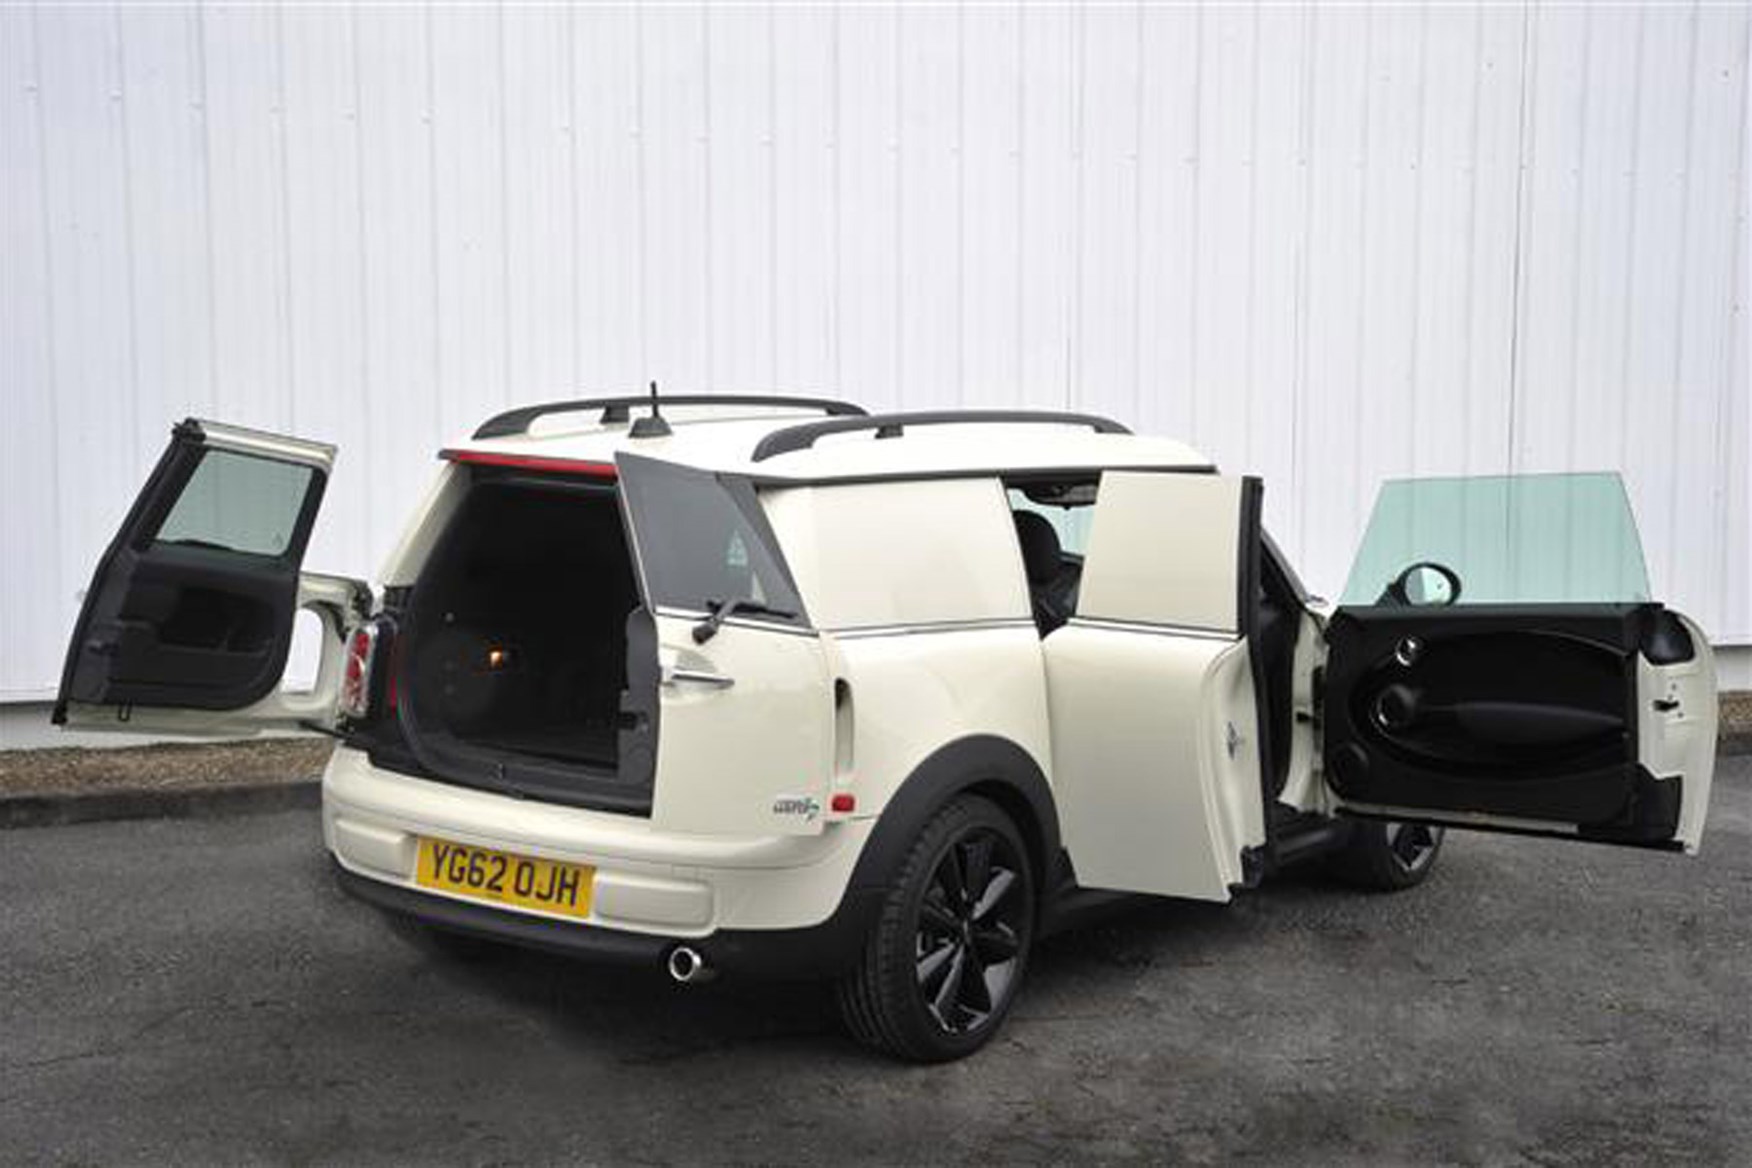 MINI Clubvan review on Parkers Vans - load area access